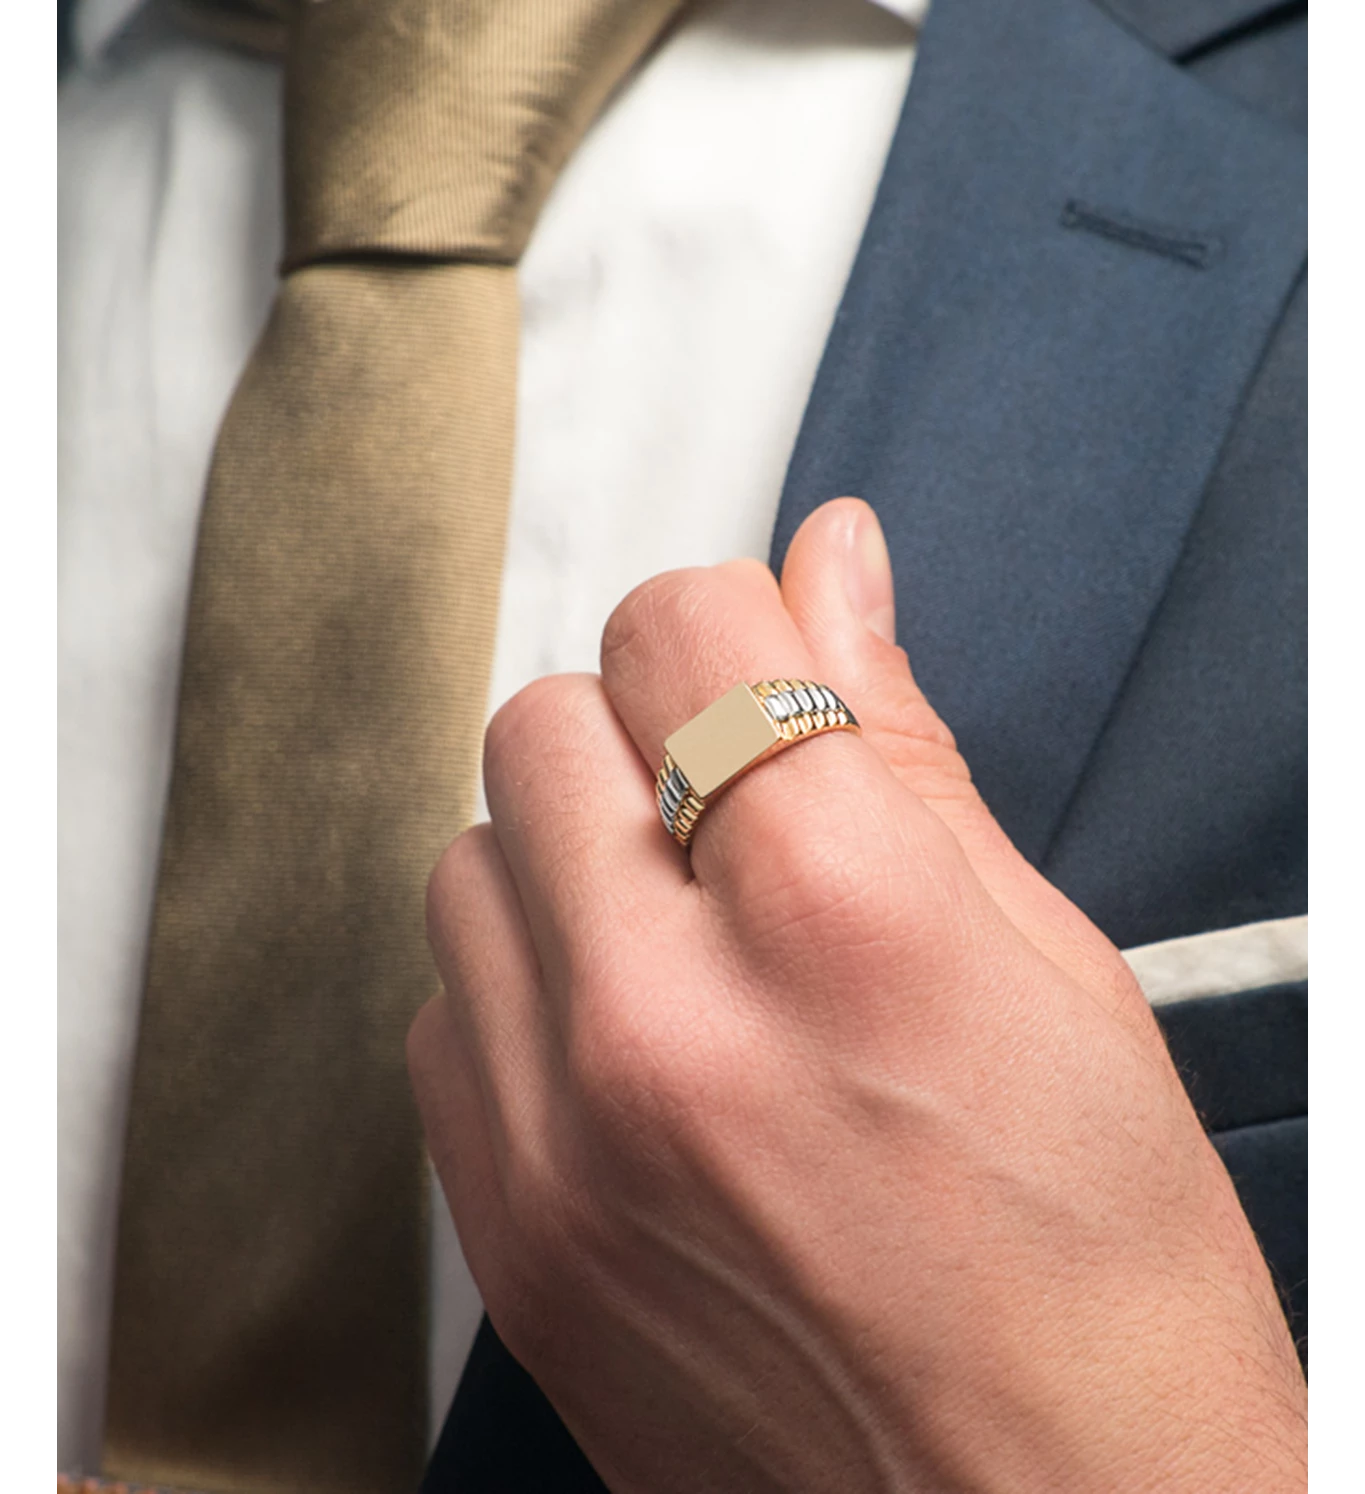 Combined zlatni prsten